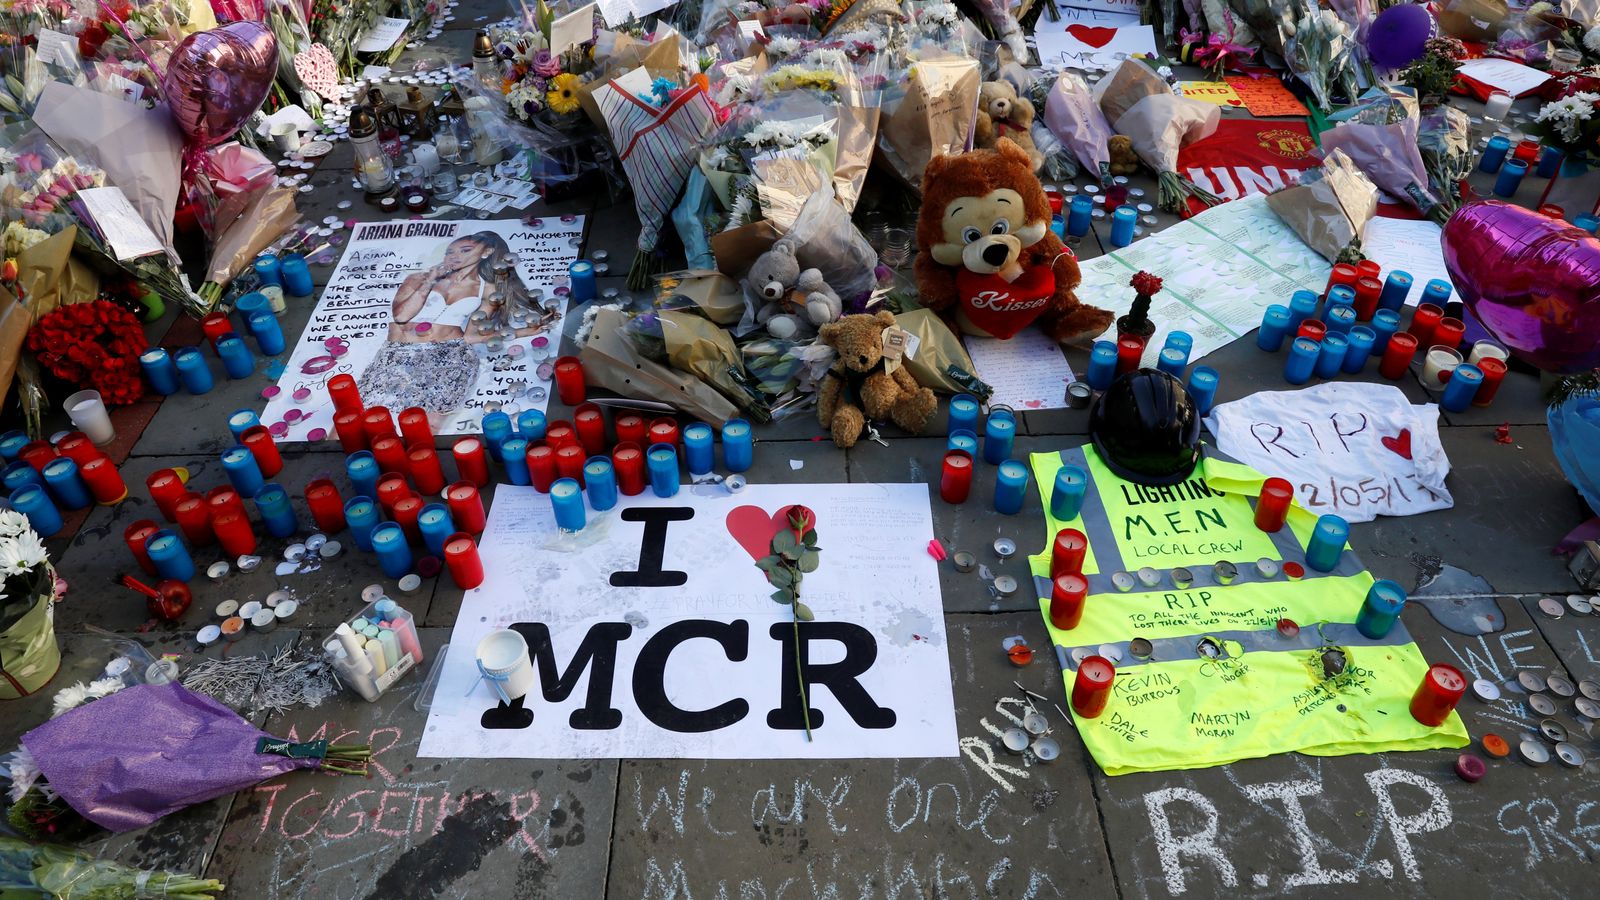 UK terror attack survivors condemn anti-Muslim hatred in joint letter